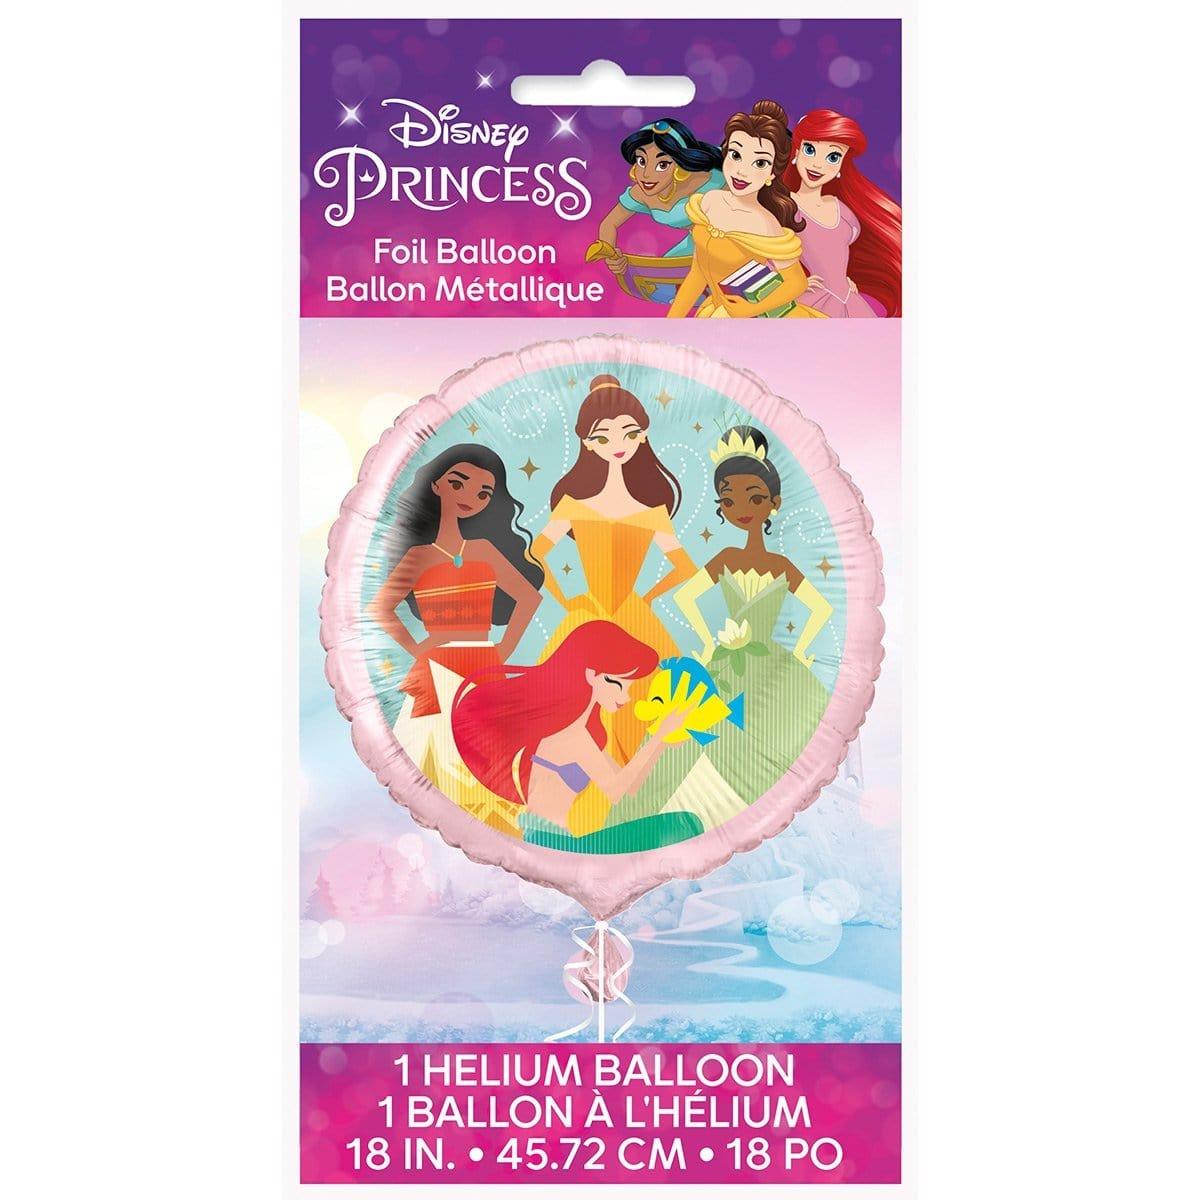 DISNEY PRINCESS Birthday Balloons Ariel Belle Rapunzel Party